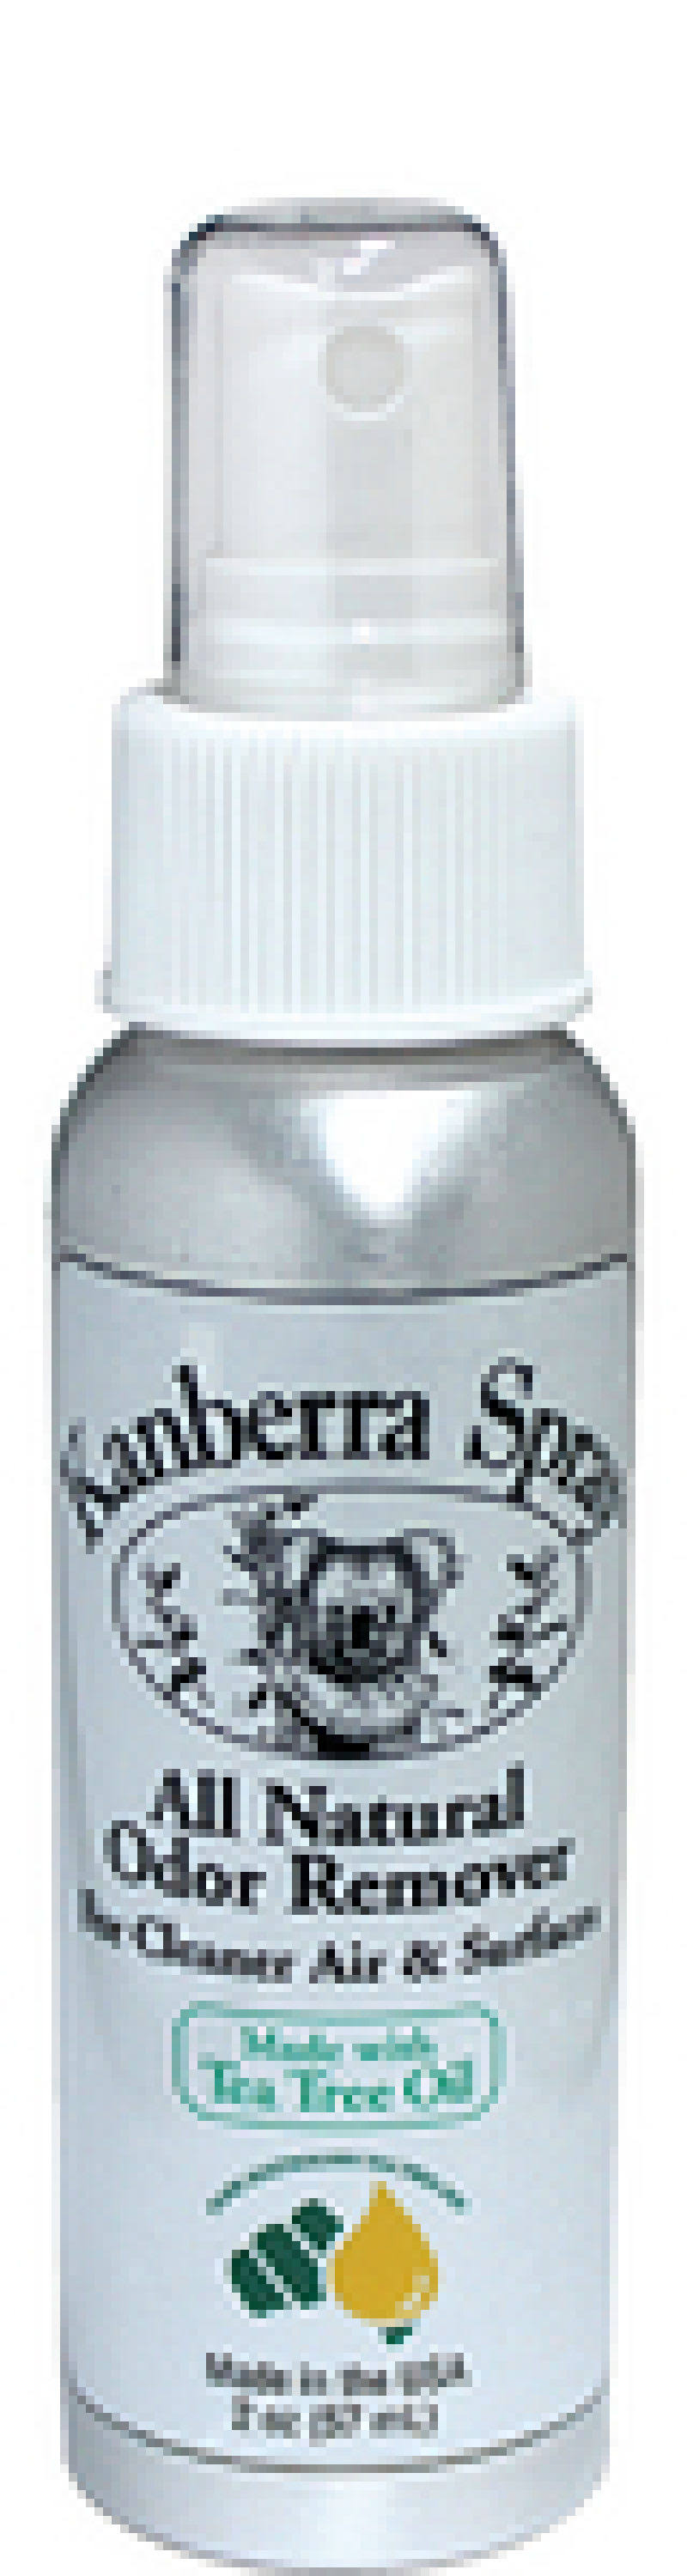 Kanberra Products Airborne Odor Remover Spray - Tea Tree Oil, 2oz